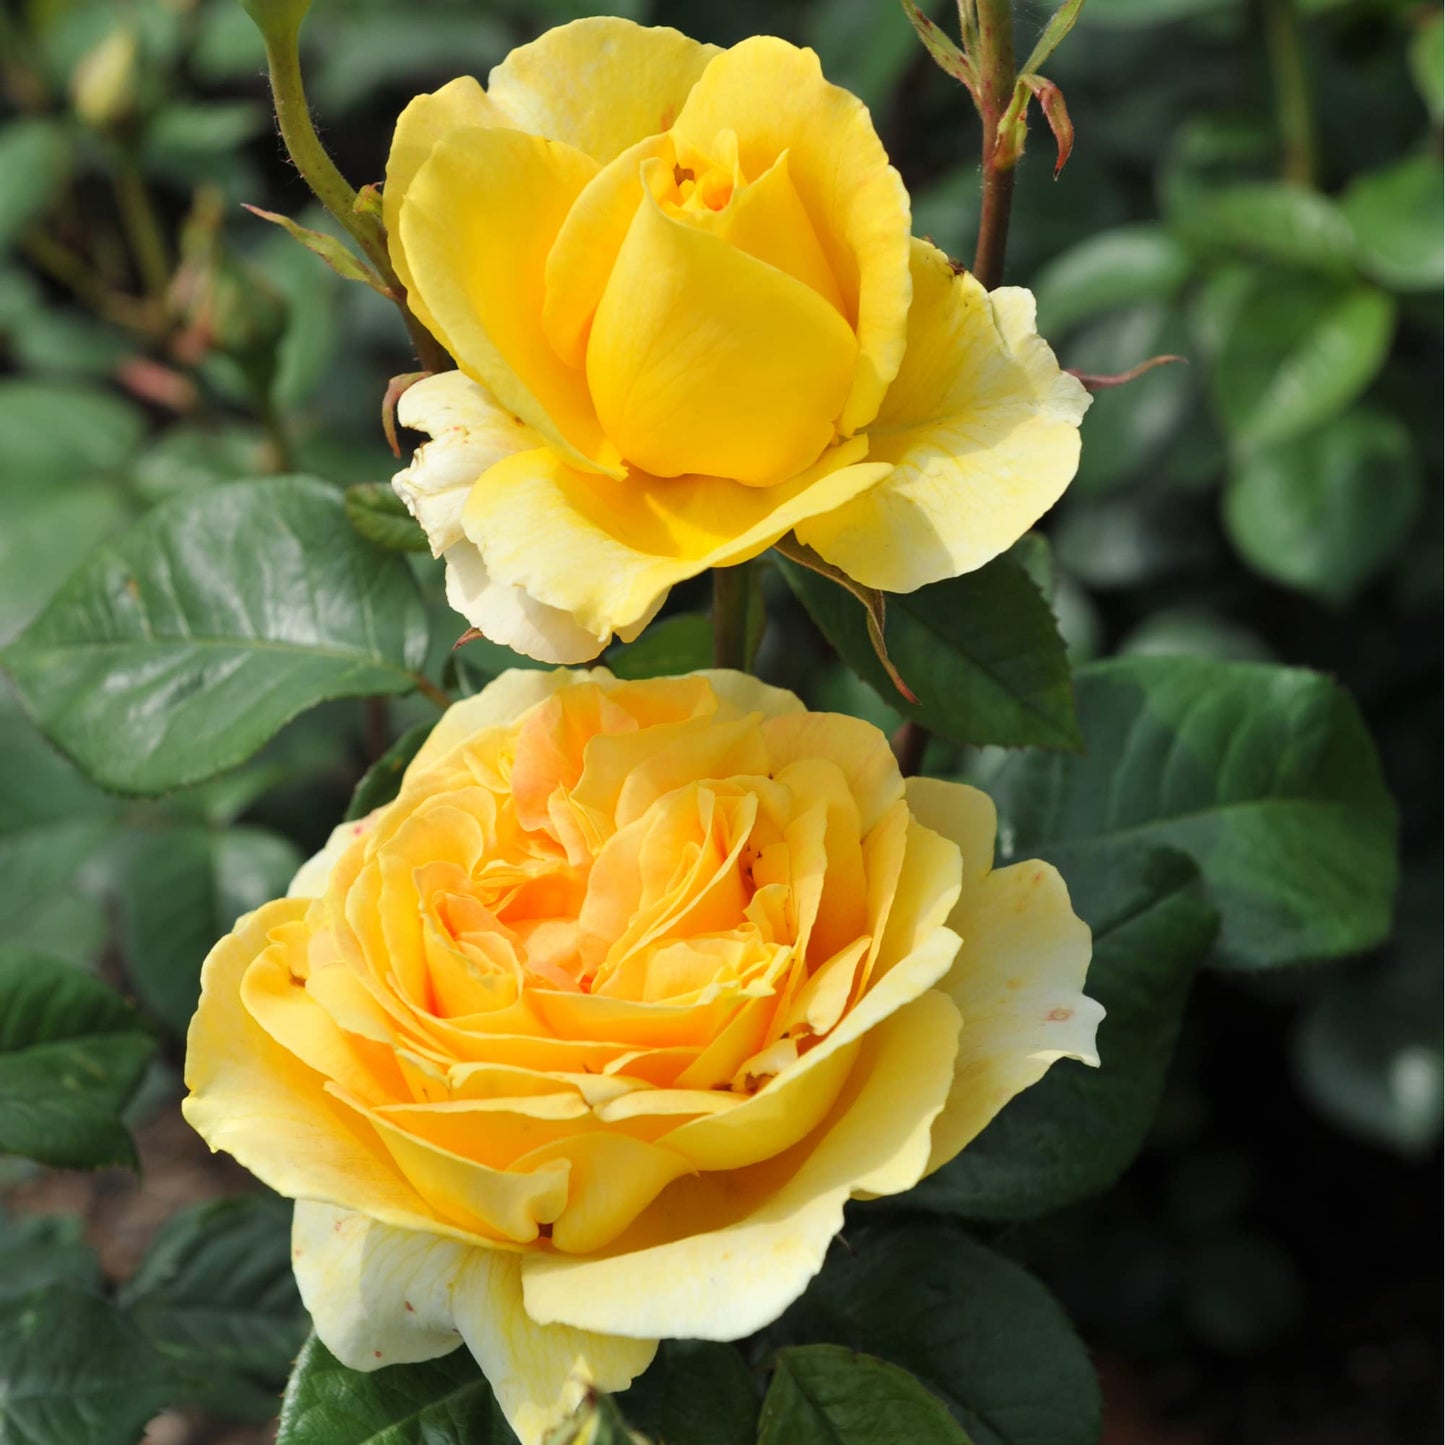 Rose Plants - Floribunda - 'Mountbatten' - 1 x Full Plant in 5L Pot - AcquaGarden